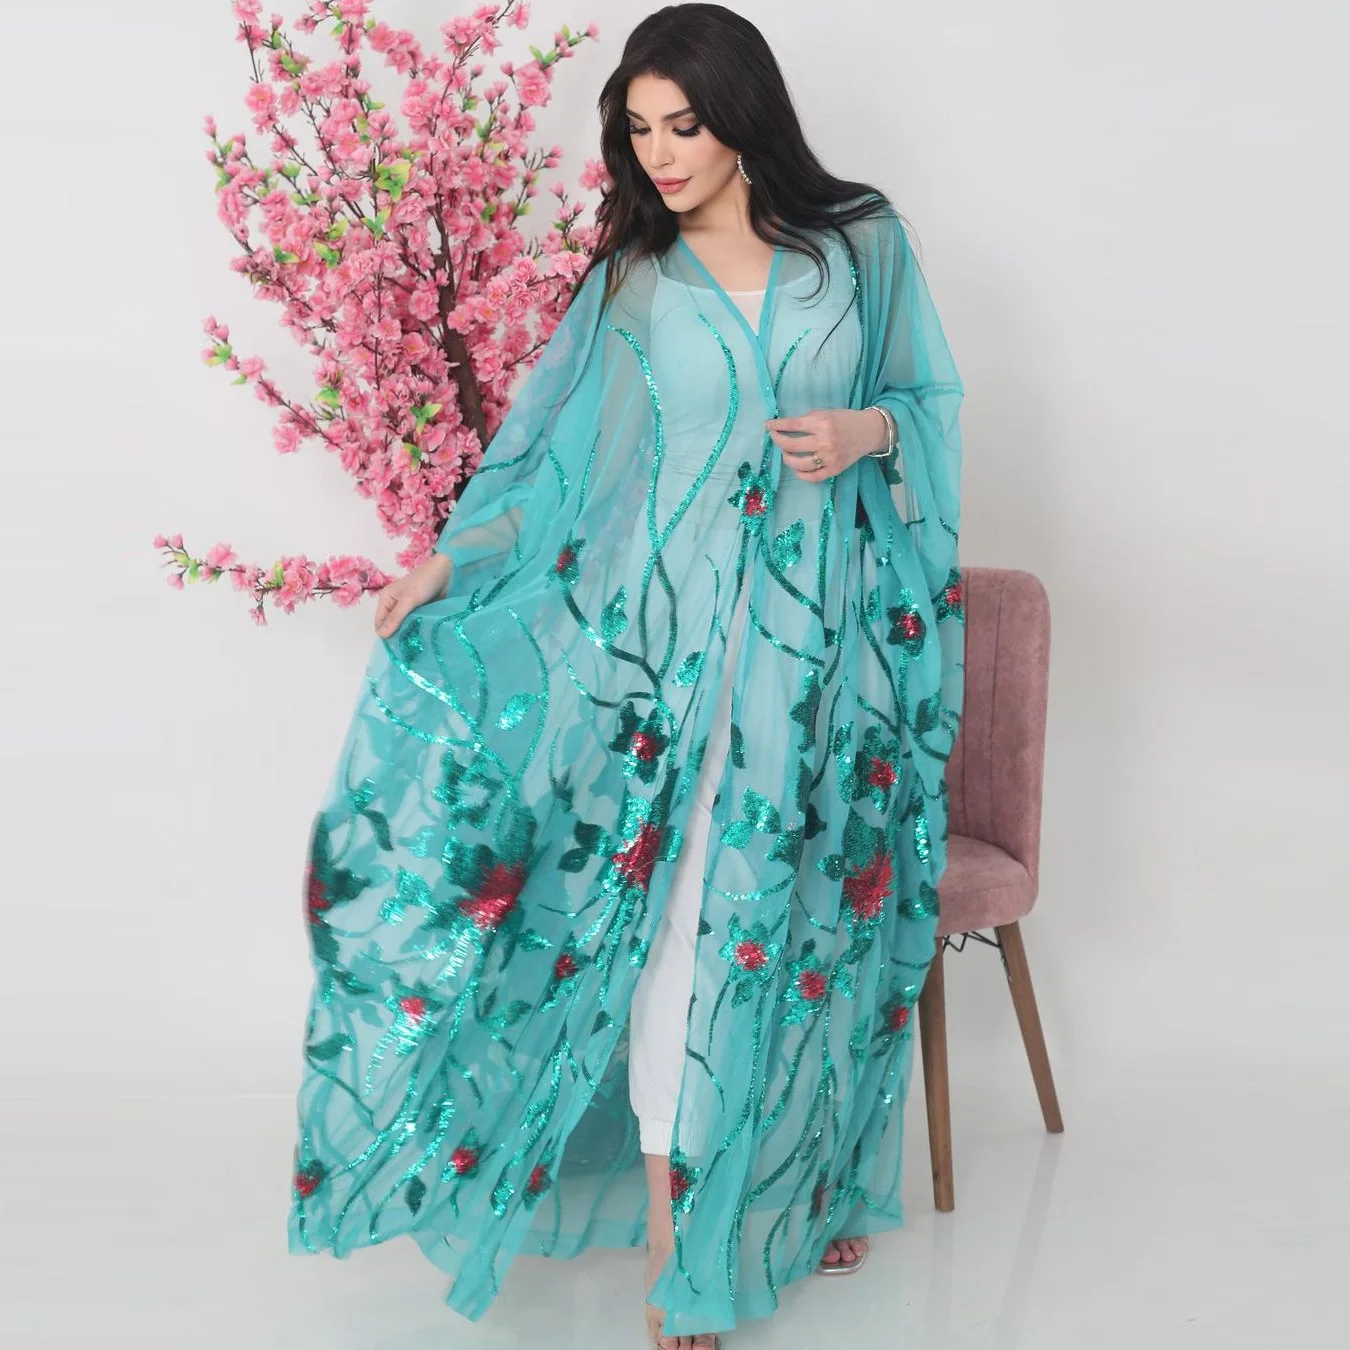 Kaftan Abayas for Women Kimono Musulmane Open Abaya Dubai Turkey Outfit Islam Arabic Muslim Long Dress Robe Longue Femme Vestido